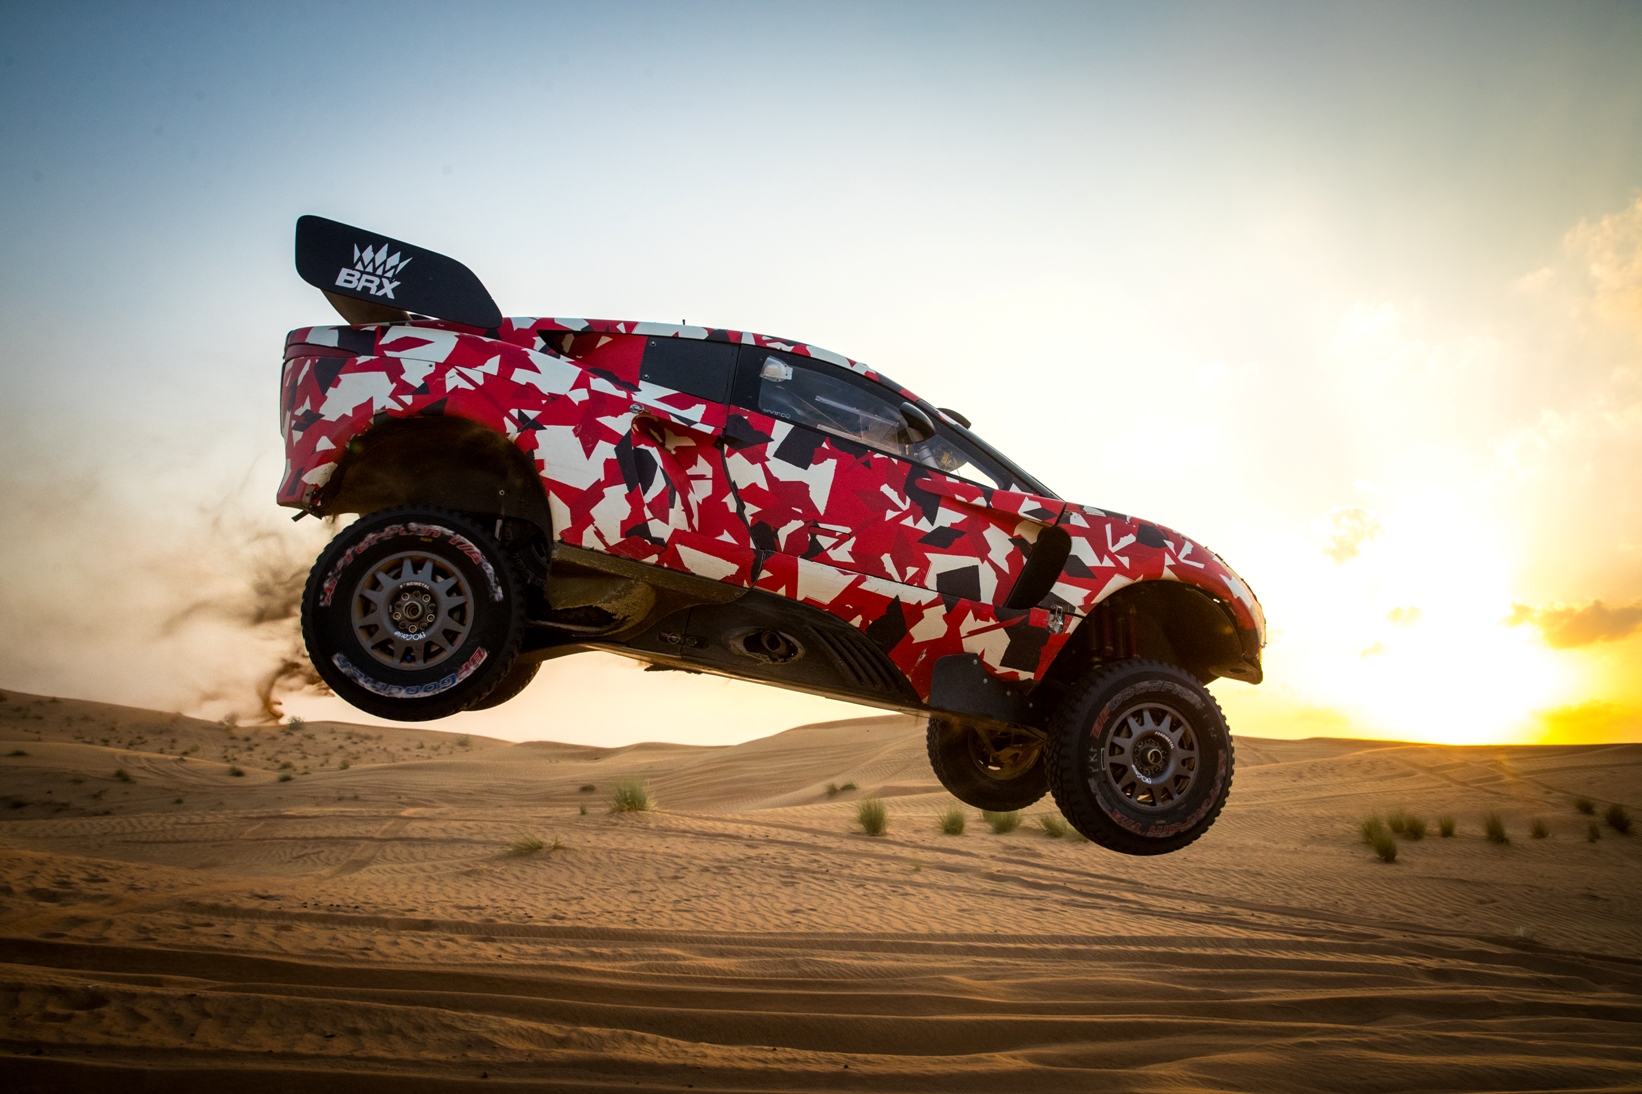 Bahrain Raid Xtreme Team Undergoes Final Preparations Ahead of Dakar Rally 2021